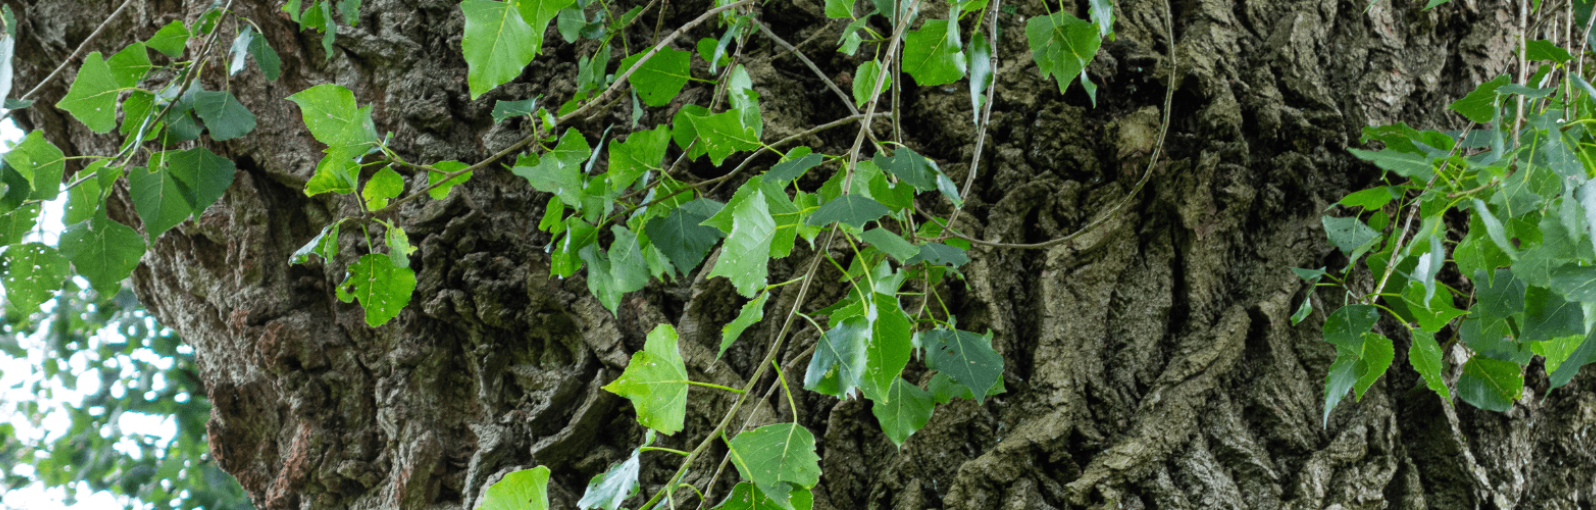 Bark and leaves of a black poplar tree